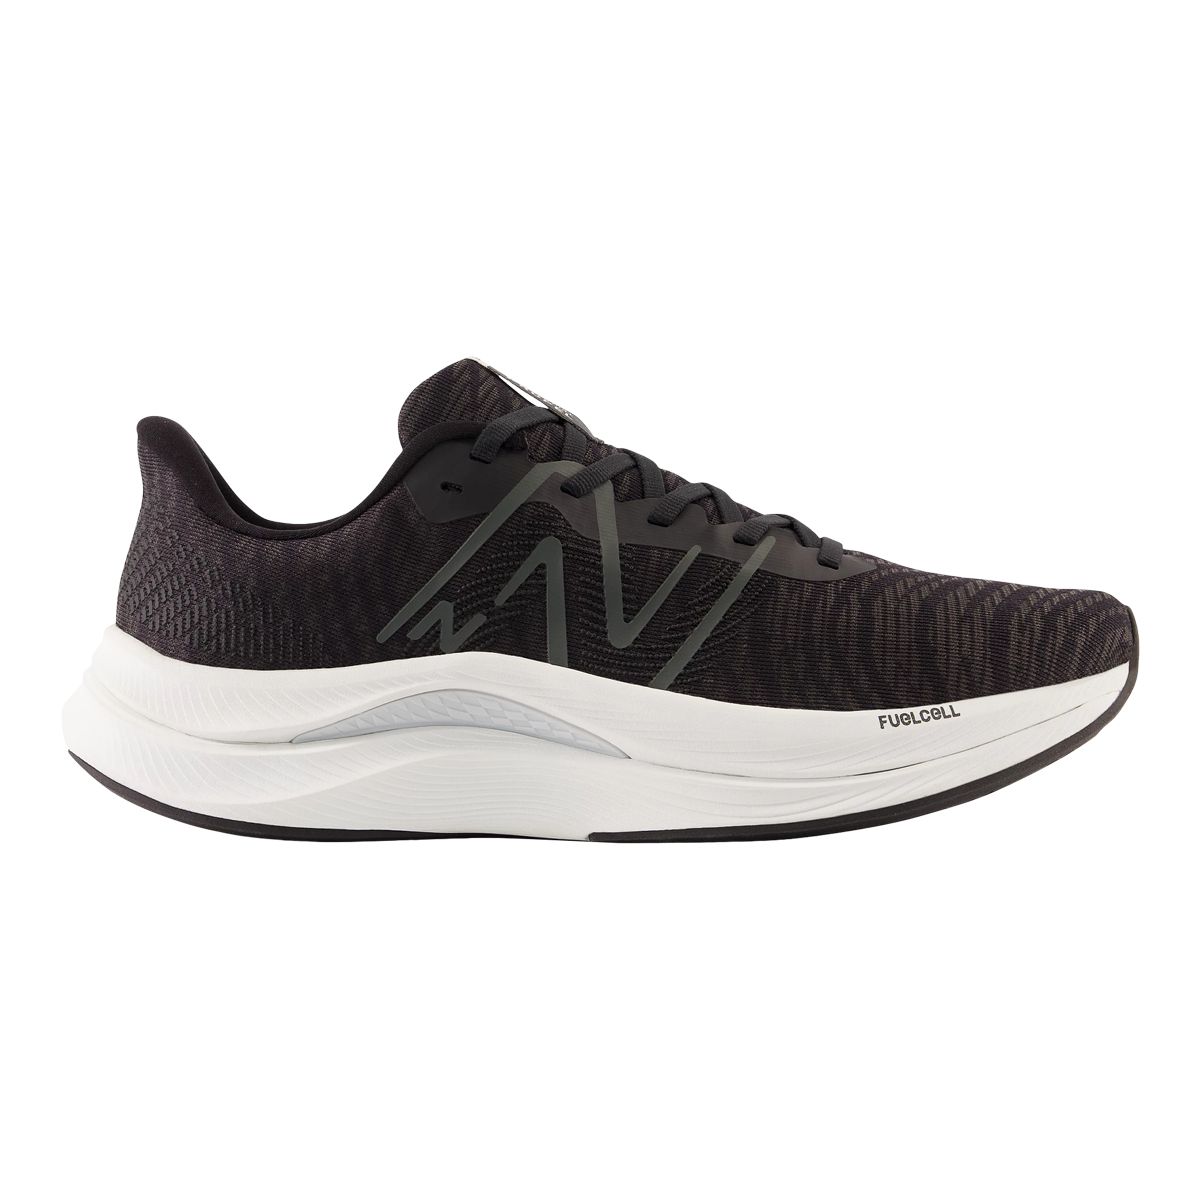 New Balance Men's Fuel Cell Propel V4 Running Shoes